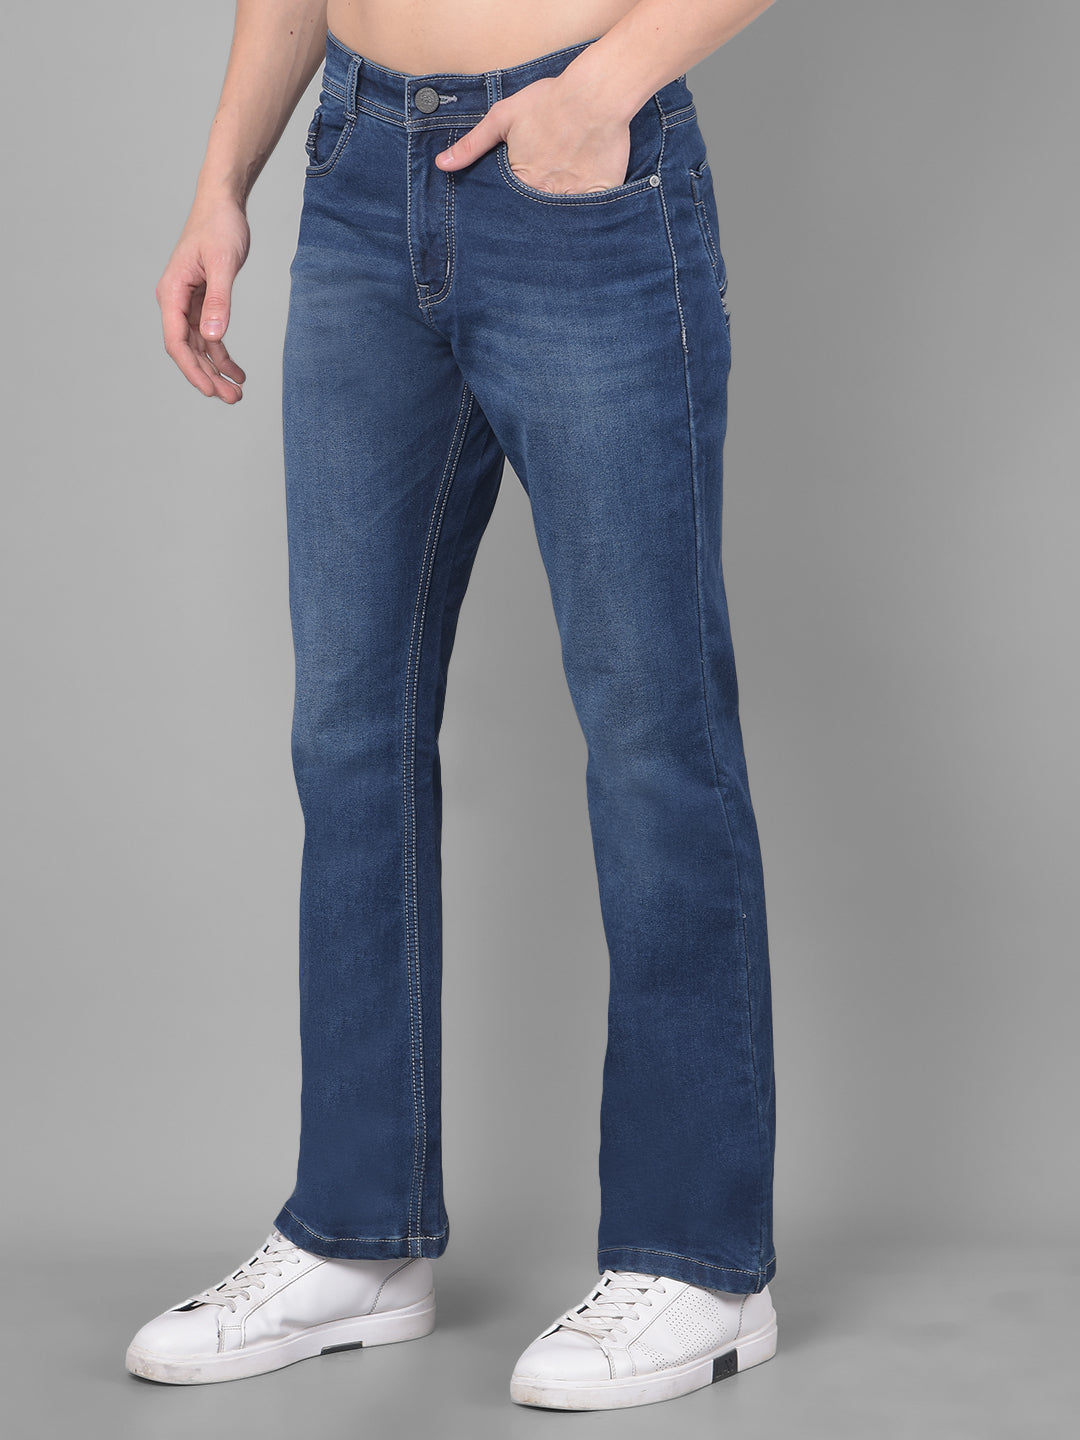 Cobb Blue Boot Cut Jeans